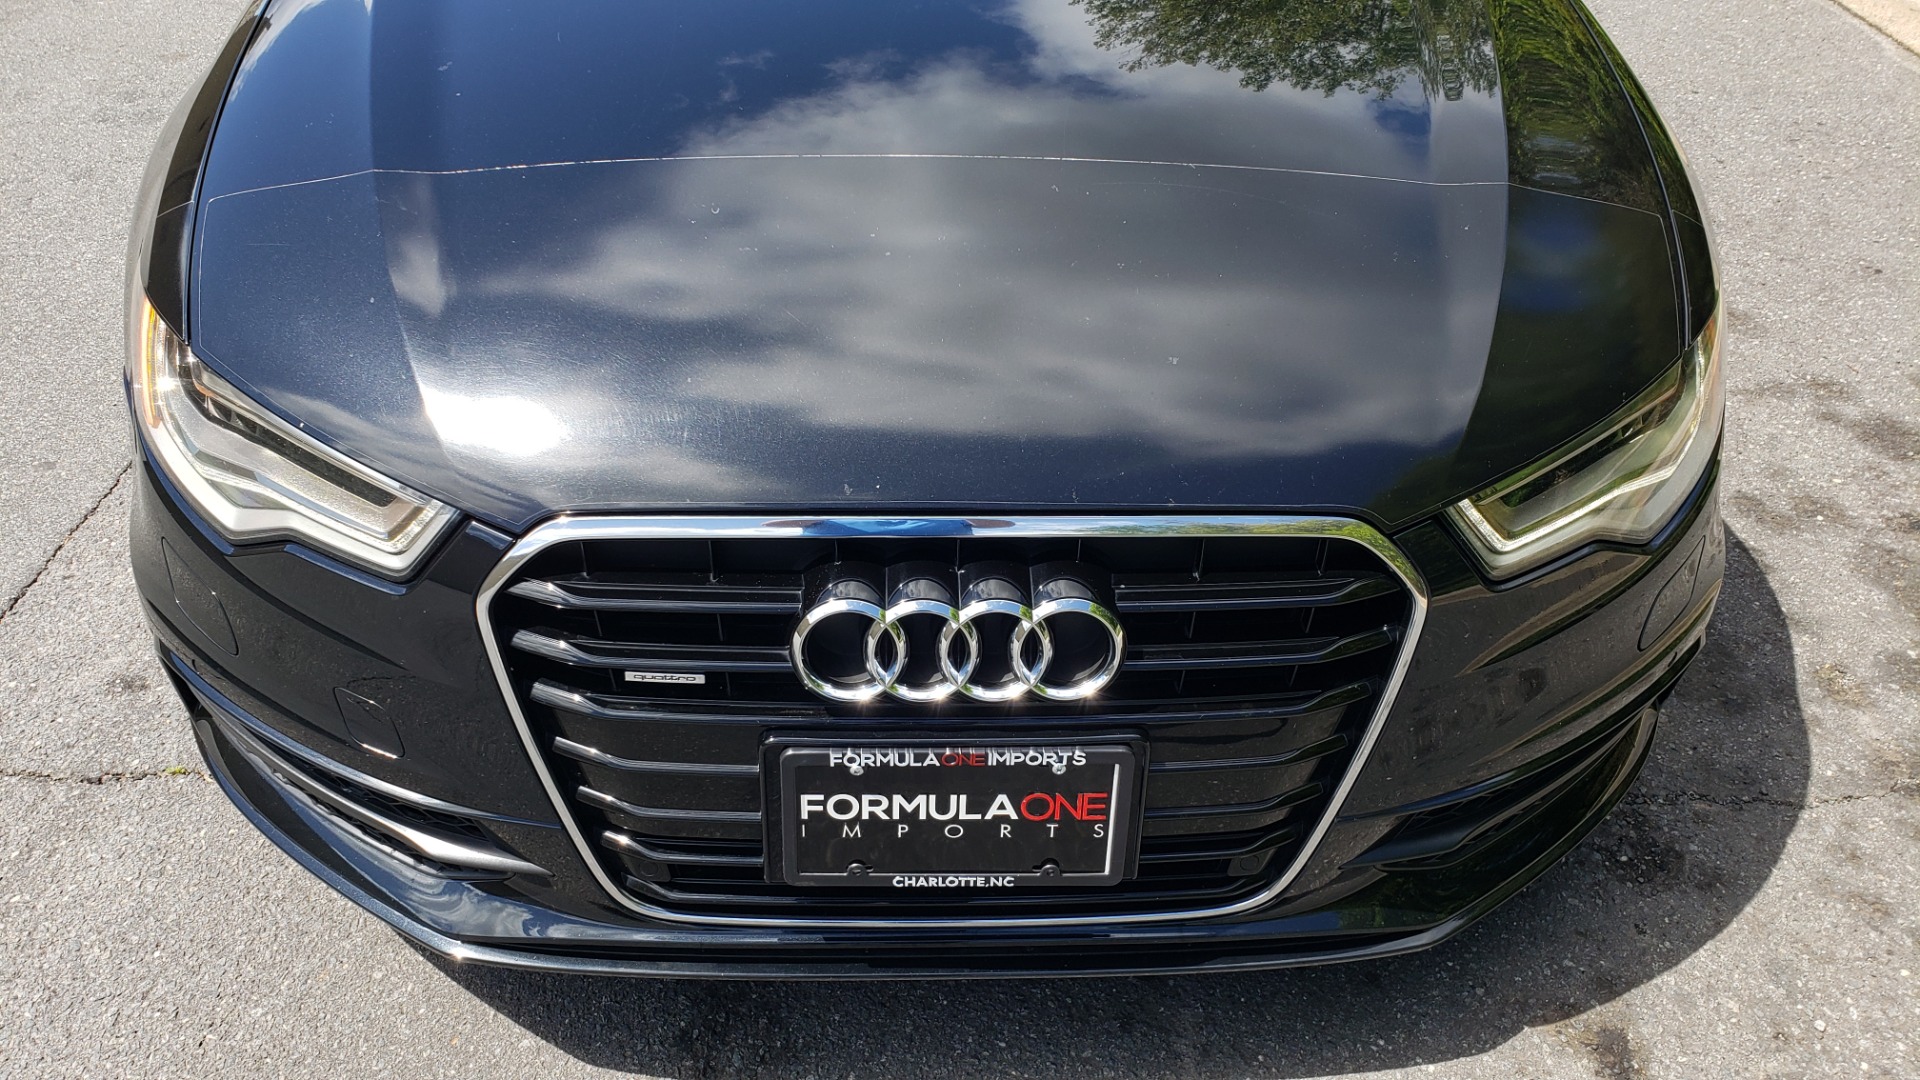 Used 2014 Audi A6 3.0L TDI PRESTIGE / SPORT / NAV / SUNROOF / BOSE / S-LINE for sale Sold at Formula Imports in Charlotte NC 28227 14